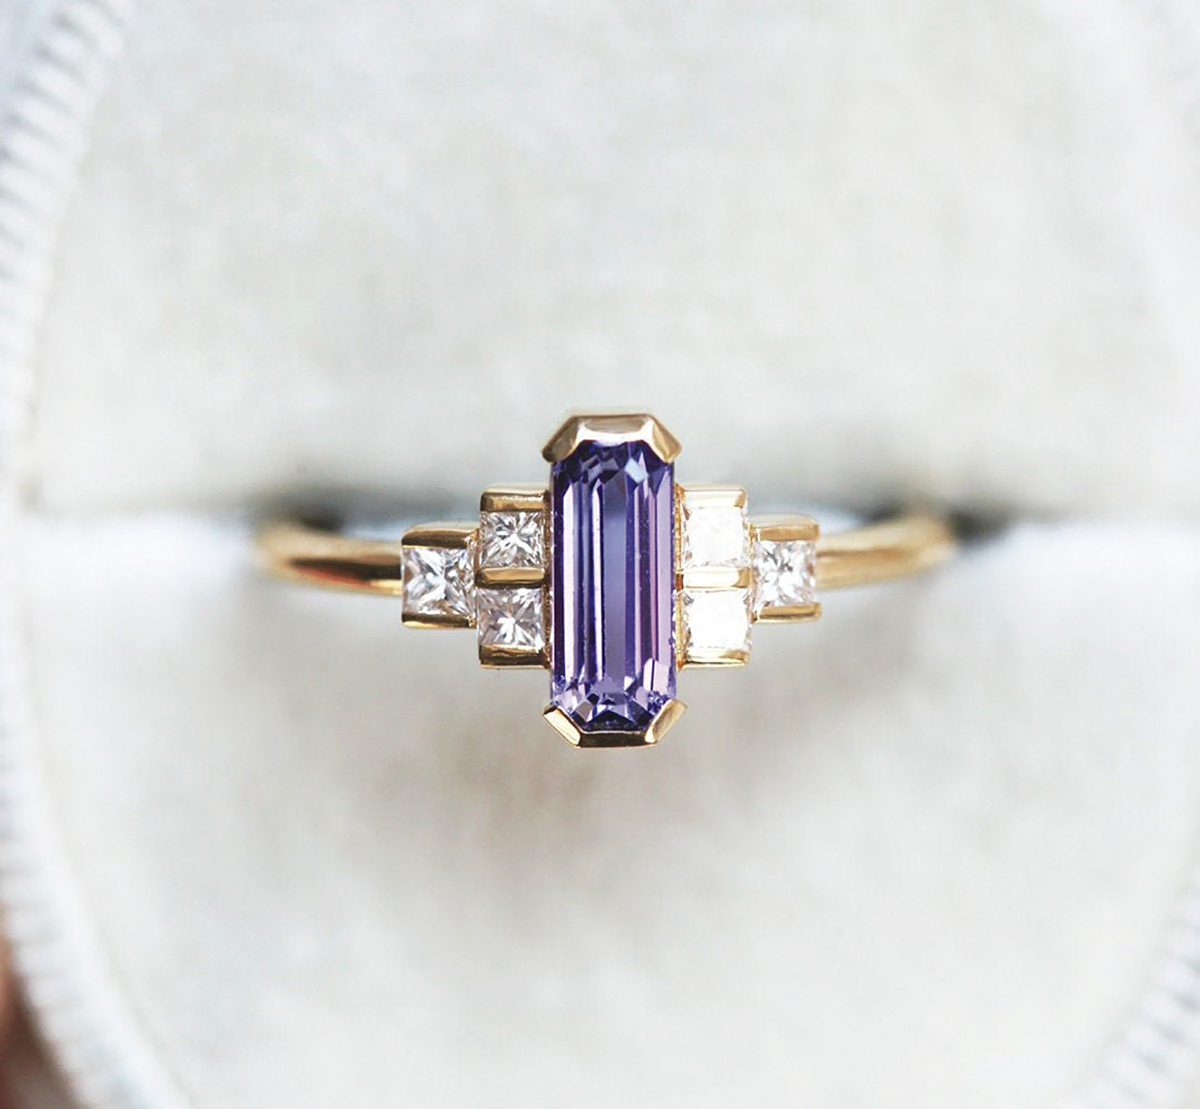 Luisa Art Deco Lavender and Saphire Diamond Ring 
															/ Moddlinc							